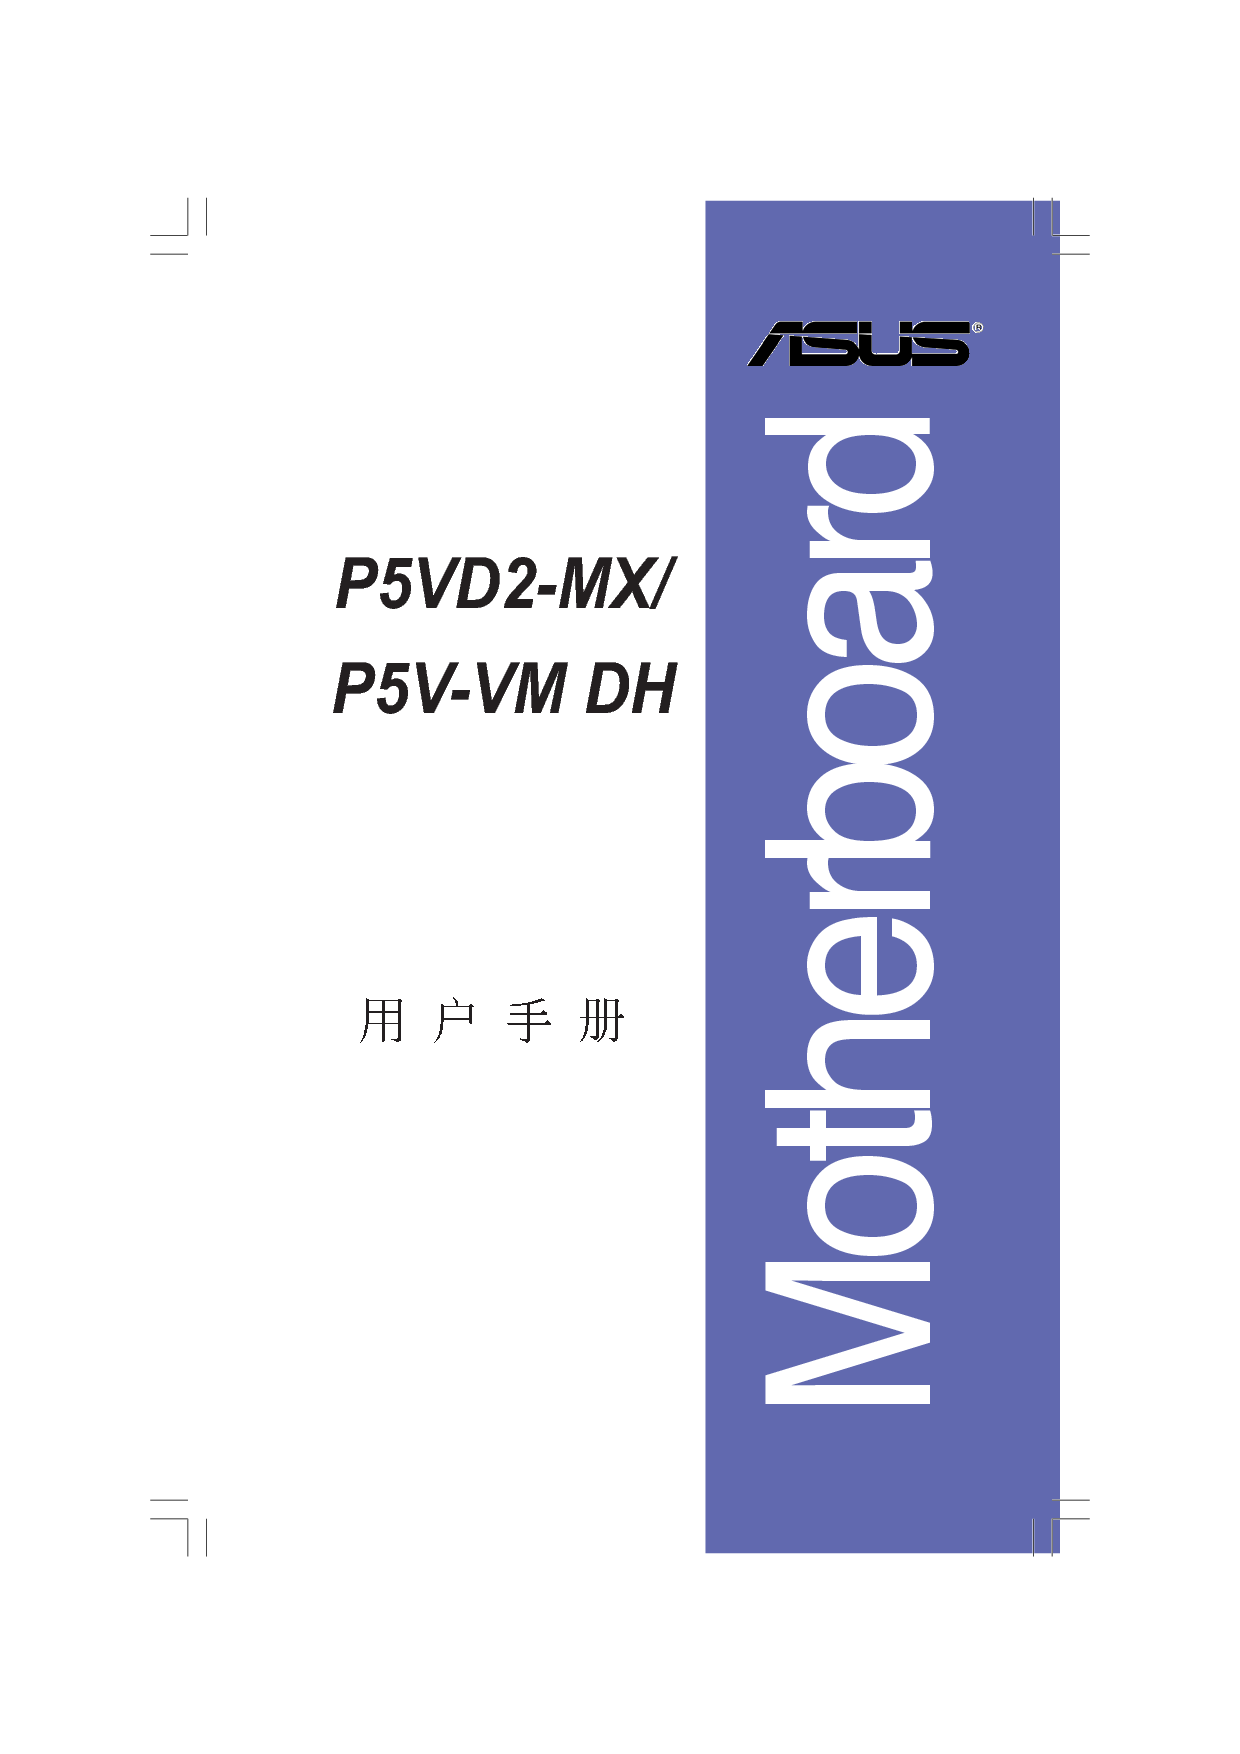 华硕 Asus P5V-VN DH, P5VD2-MX 用户手册 封面